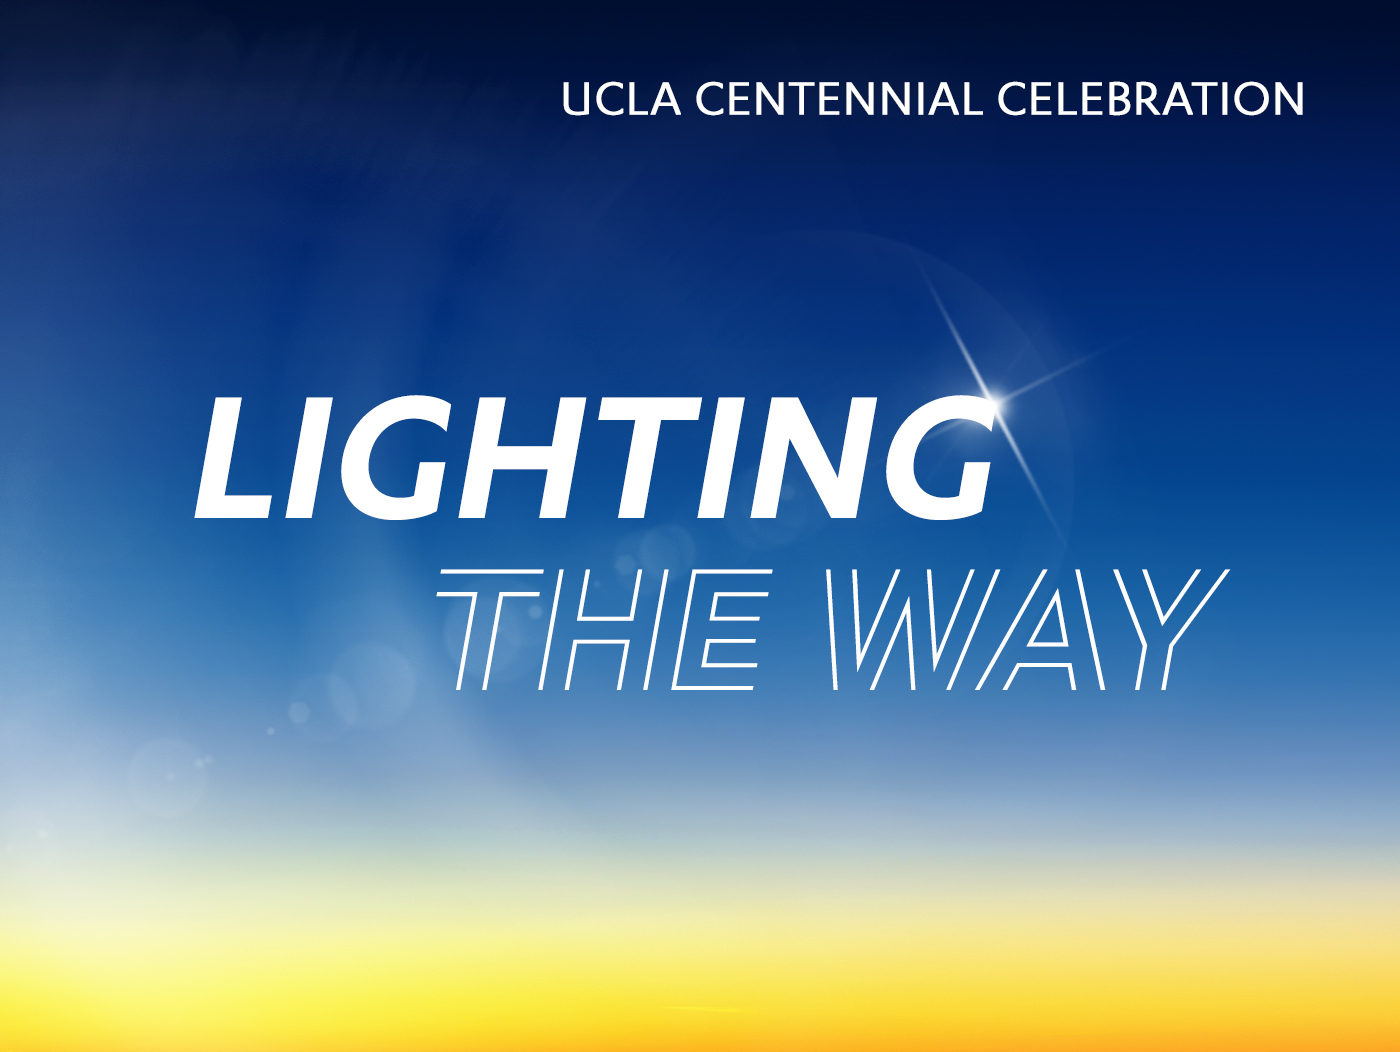 UCLA Centennial Celebration Lighting the Way